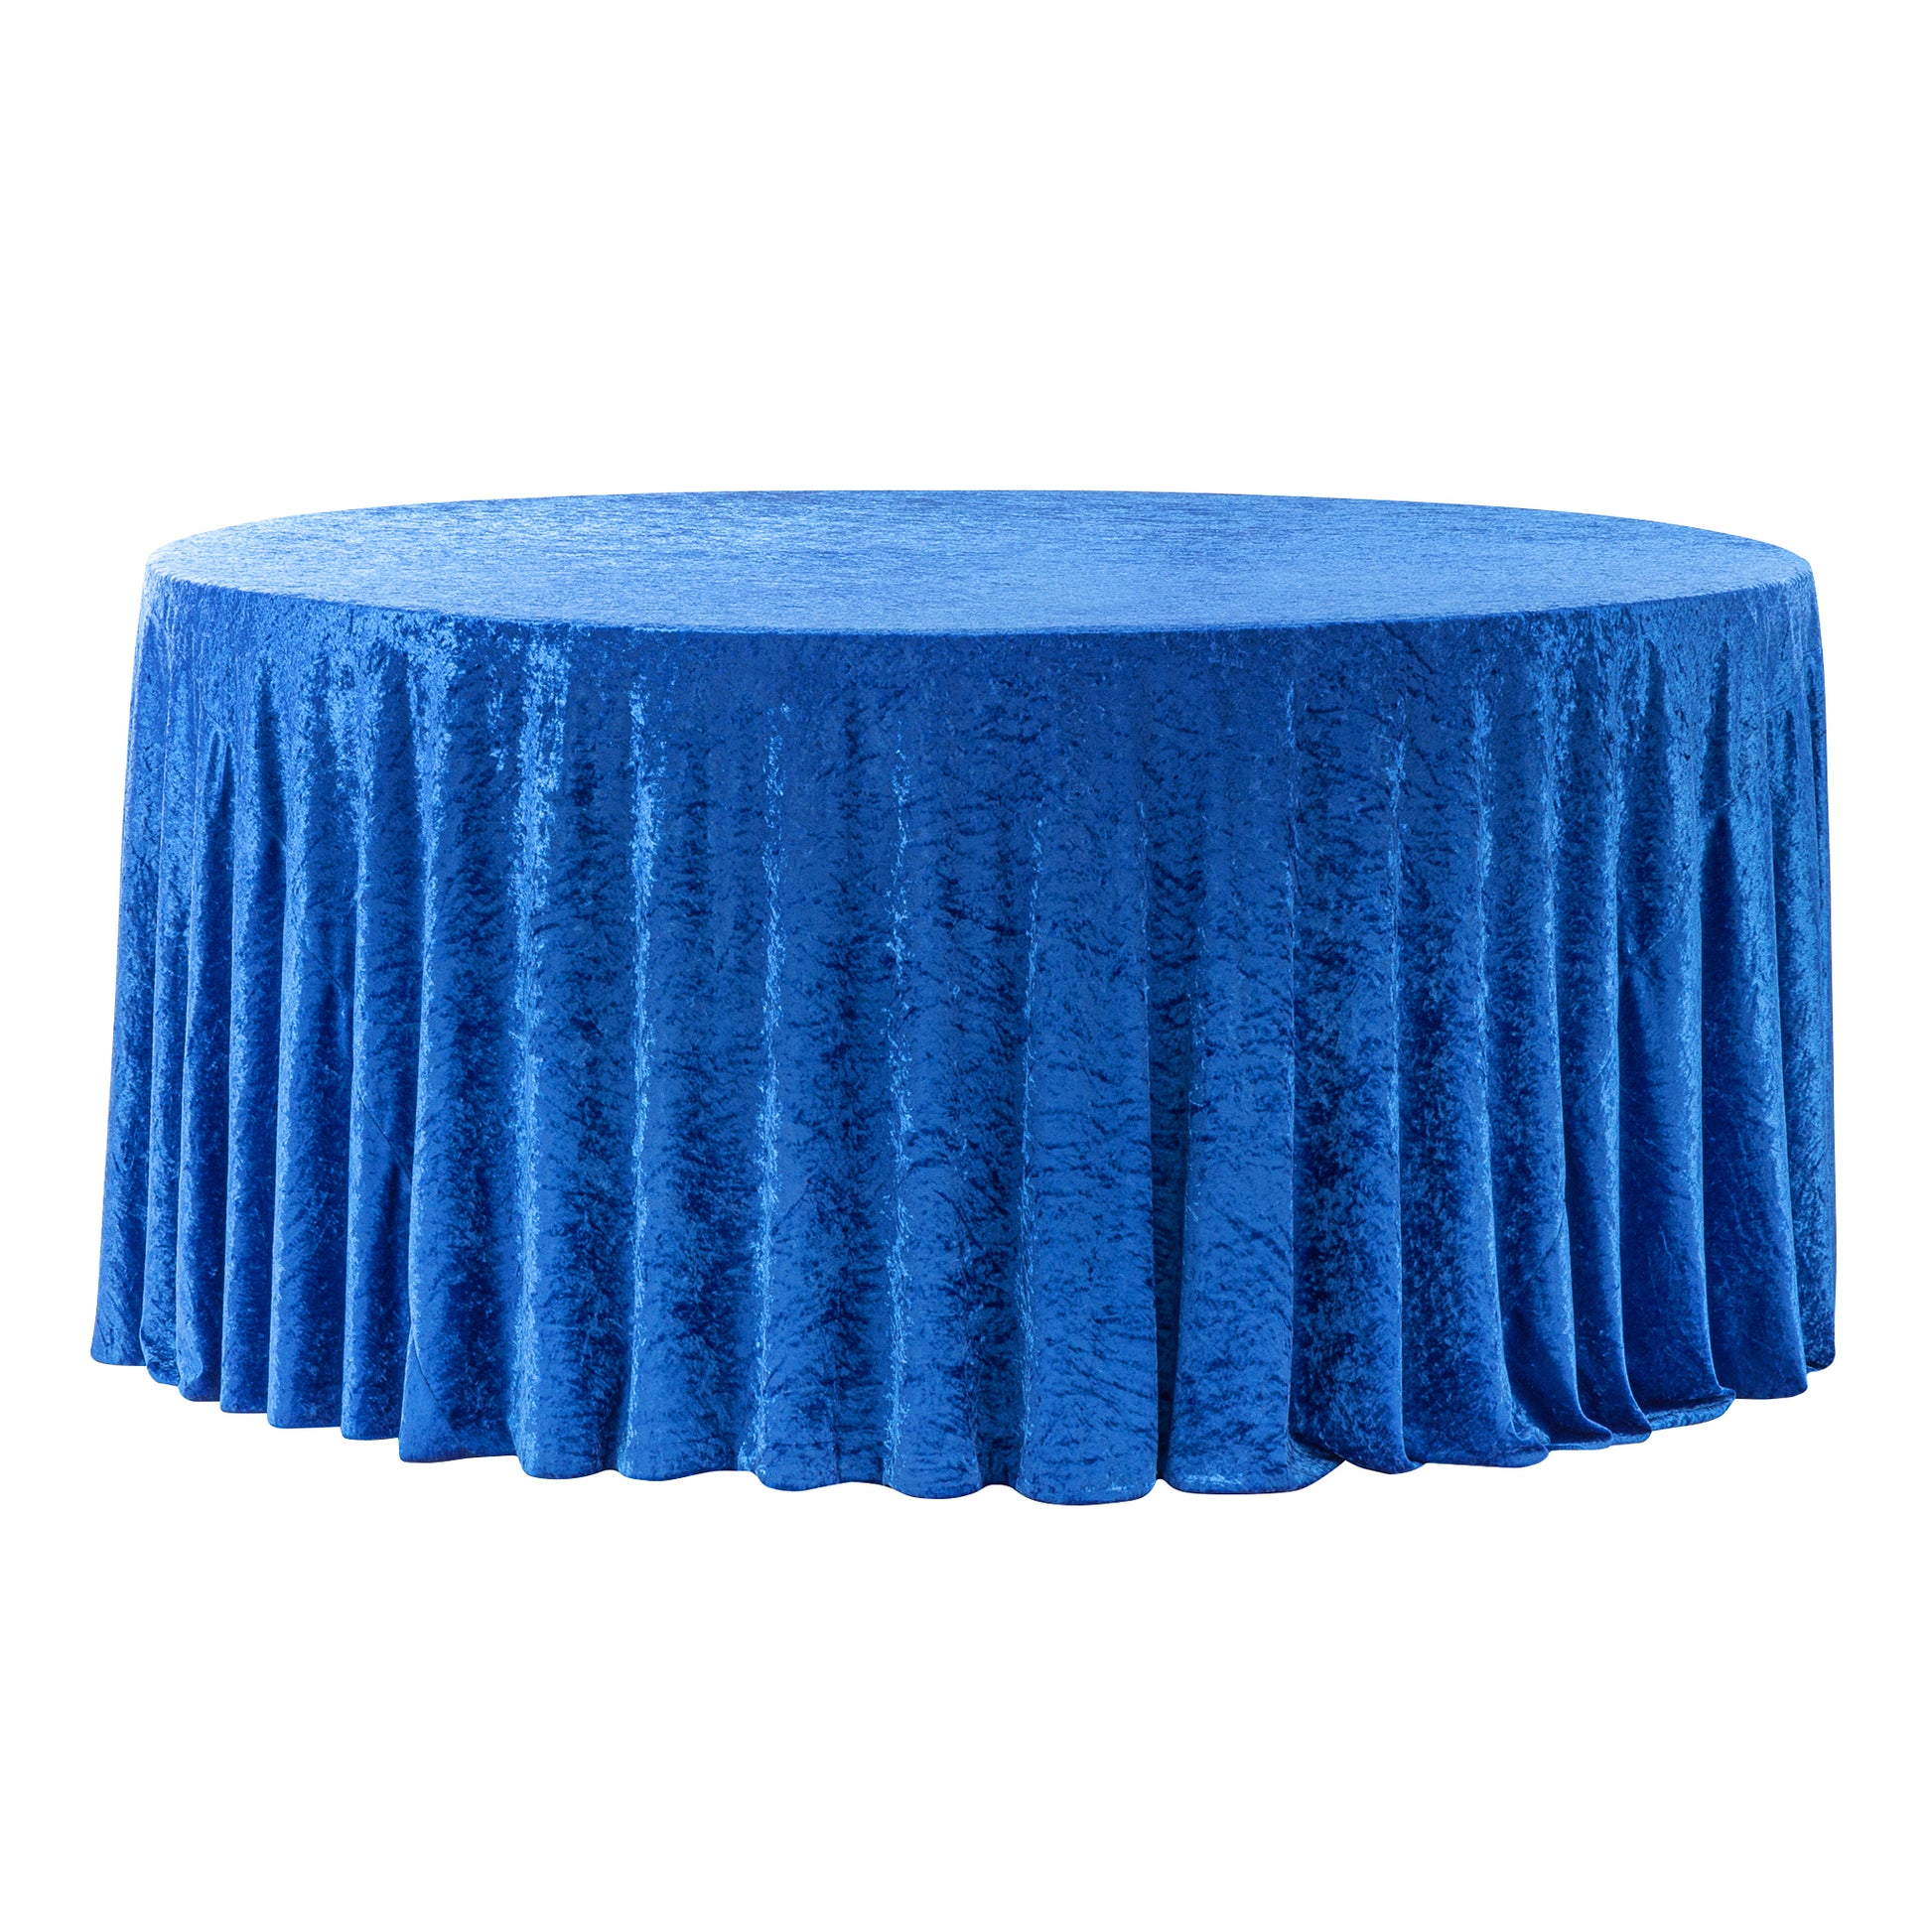 Velvet 132" Round Tablecloth - Royal Blue - CV Linens